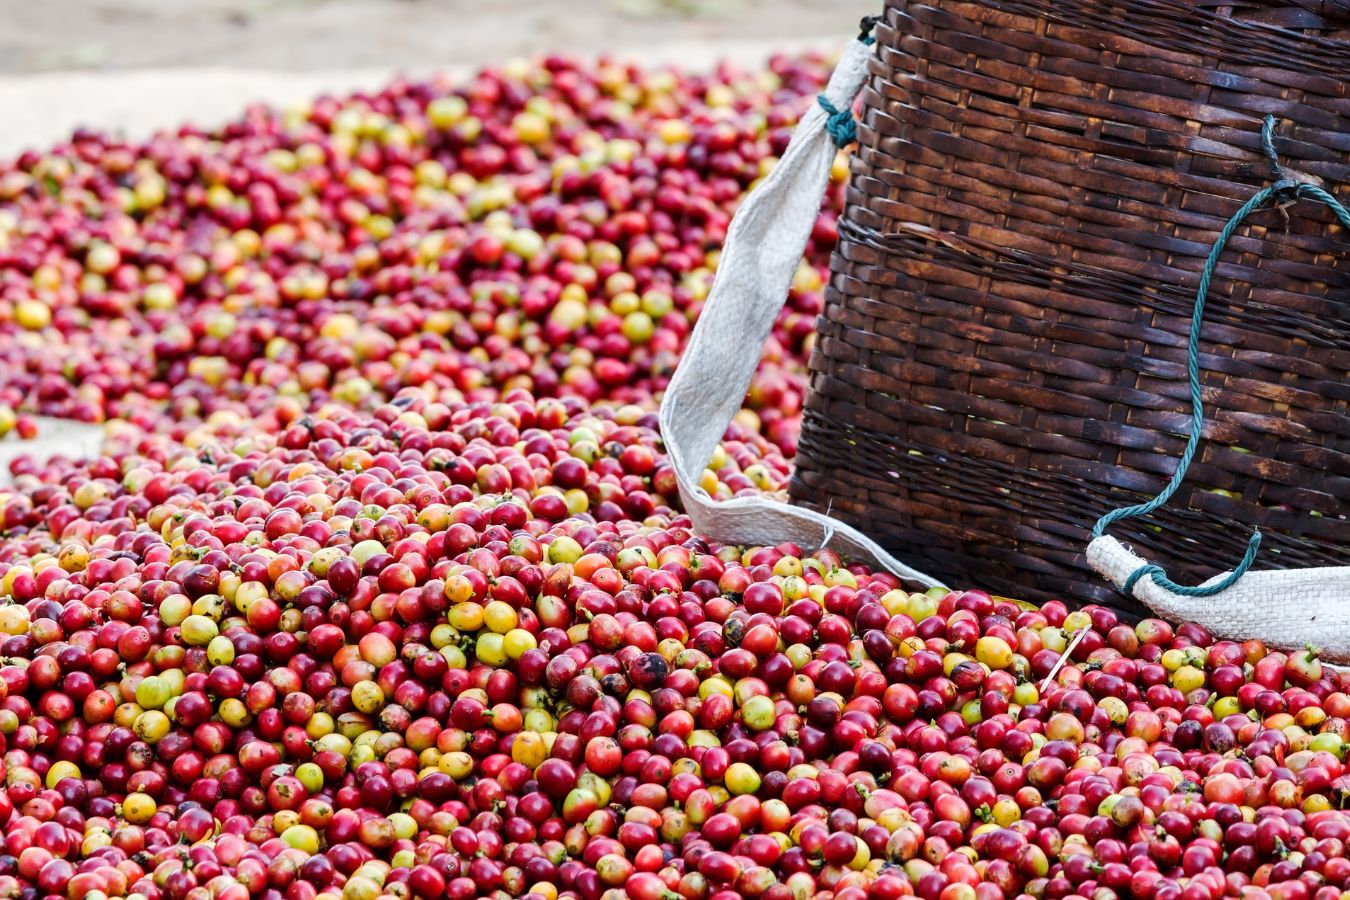 Coffee prices today October 22, 2022 - Helena Coffee Vietnam